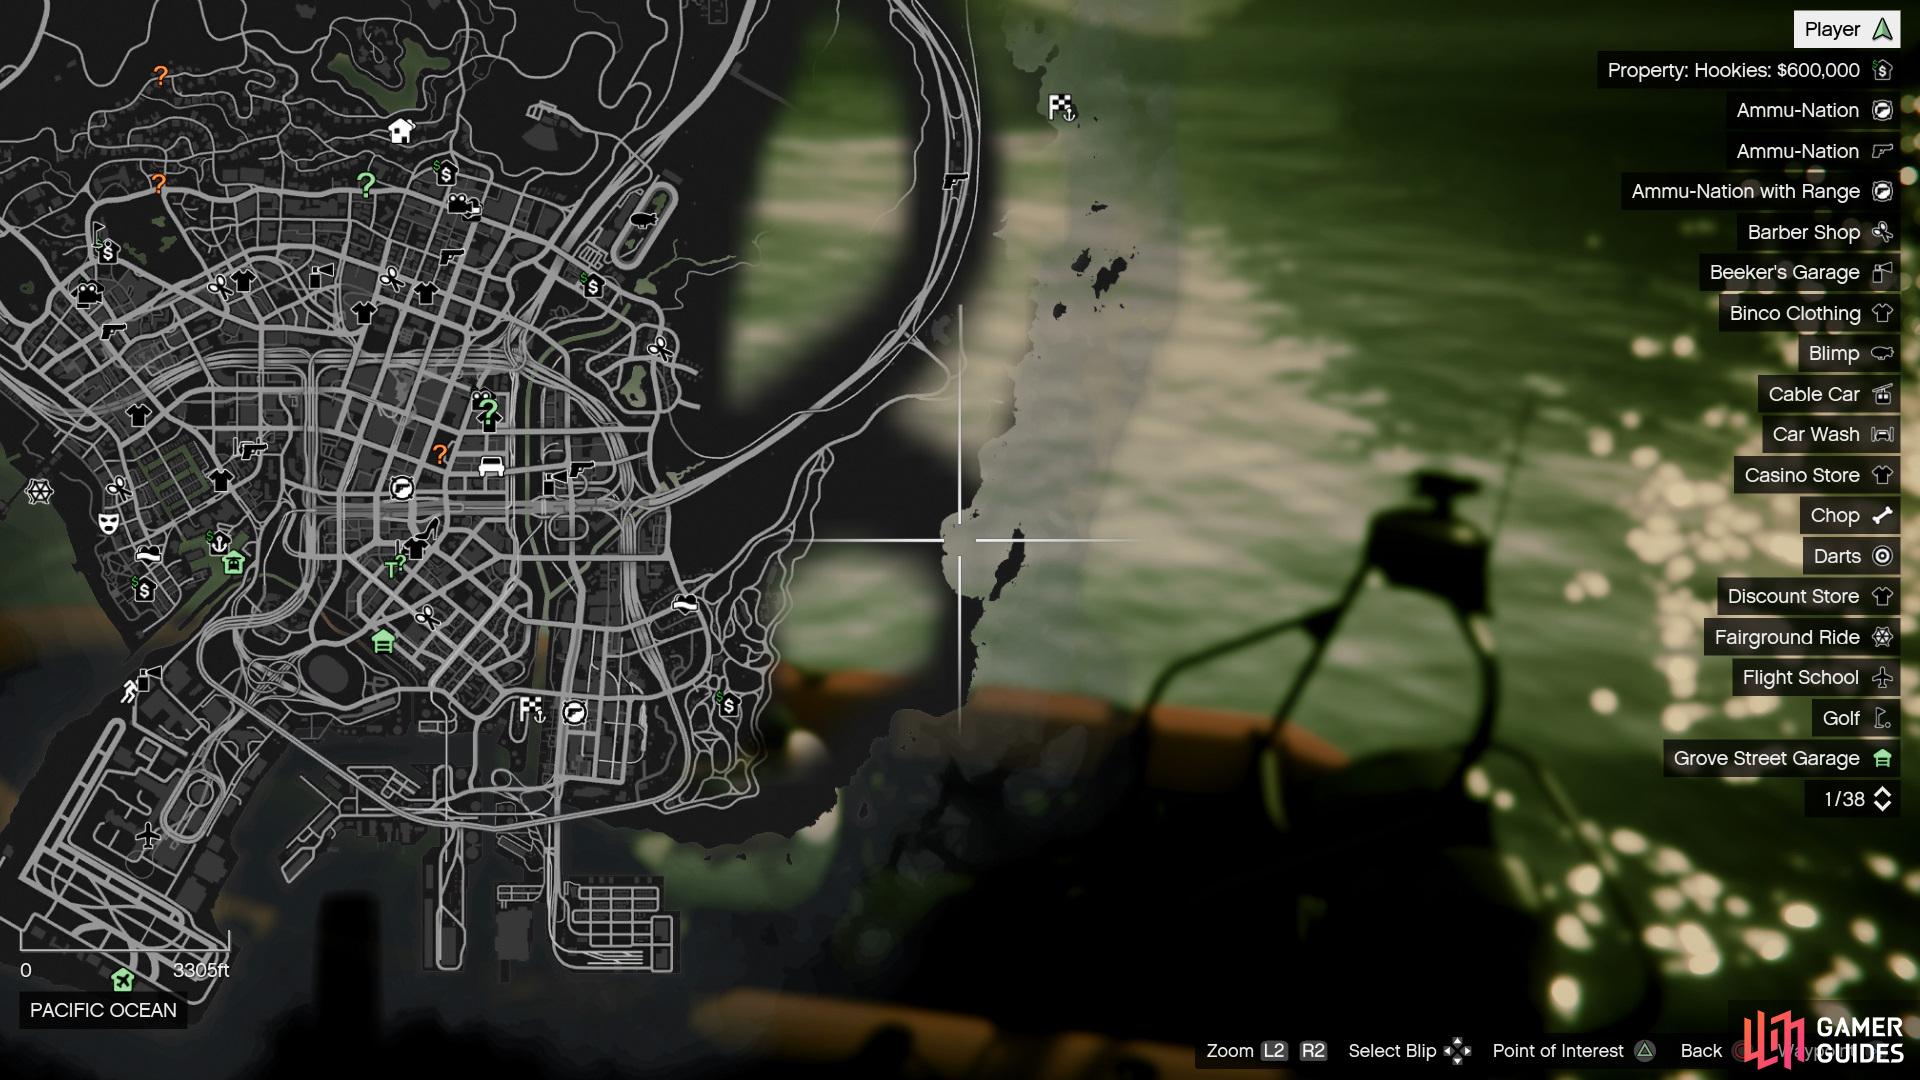 20 Hidden Locations In Grand Theft Auto V You Still Haven't Found